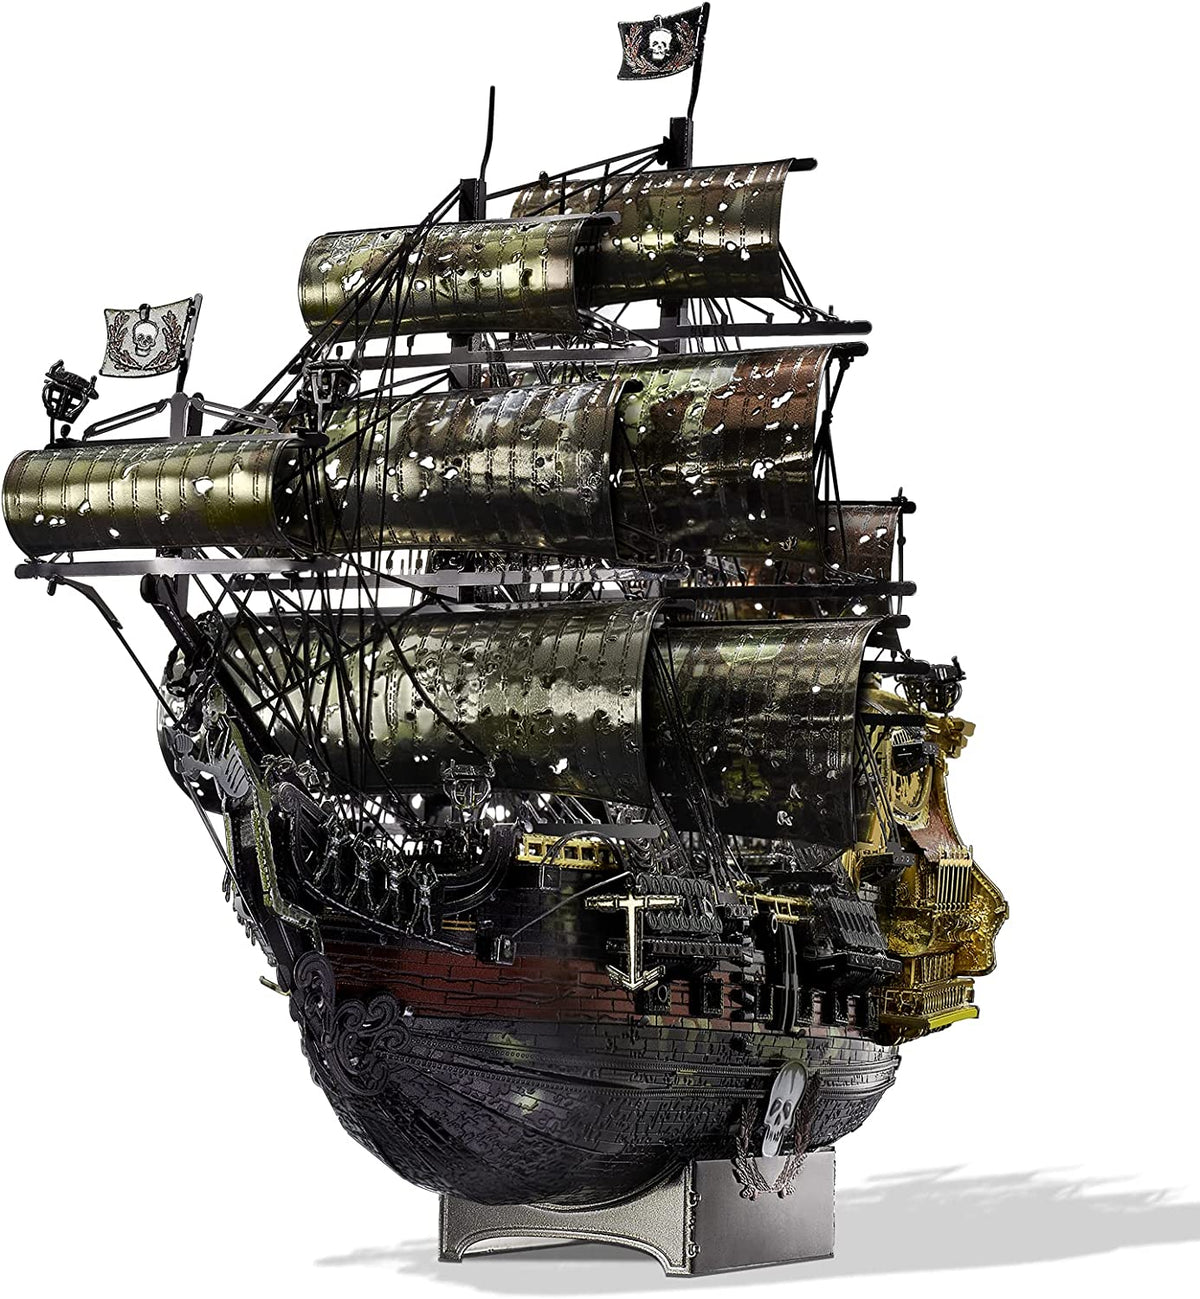 SmartBabyKid™ The Queen Anne's Revenge Pirate Ship Model Kits